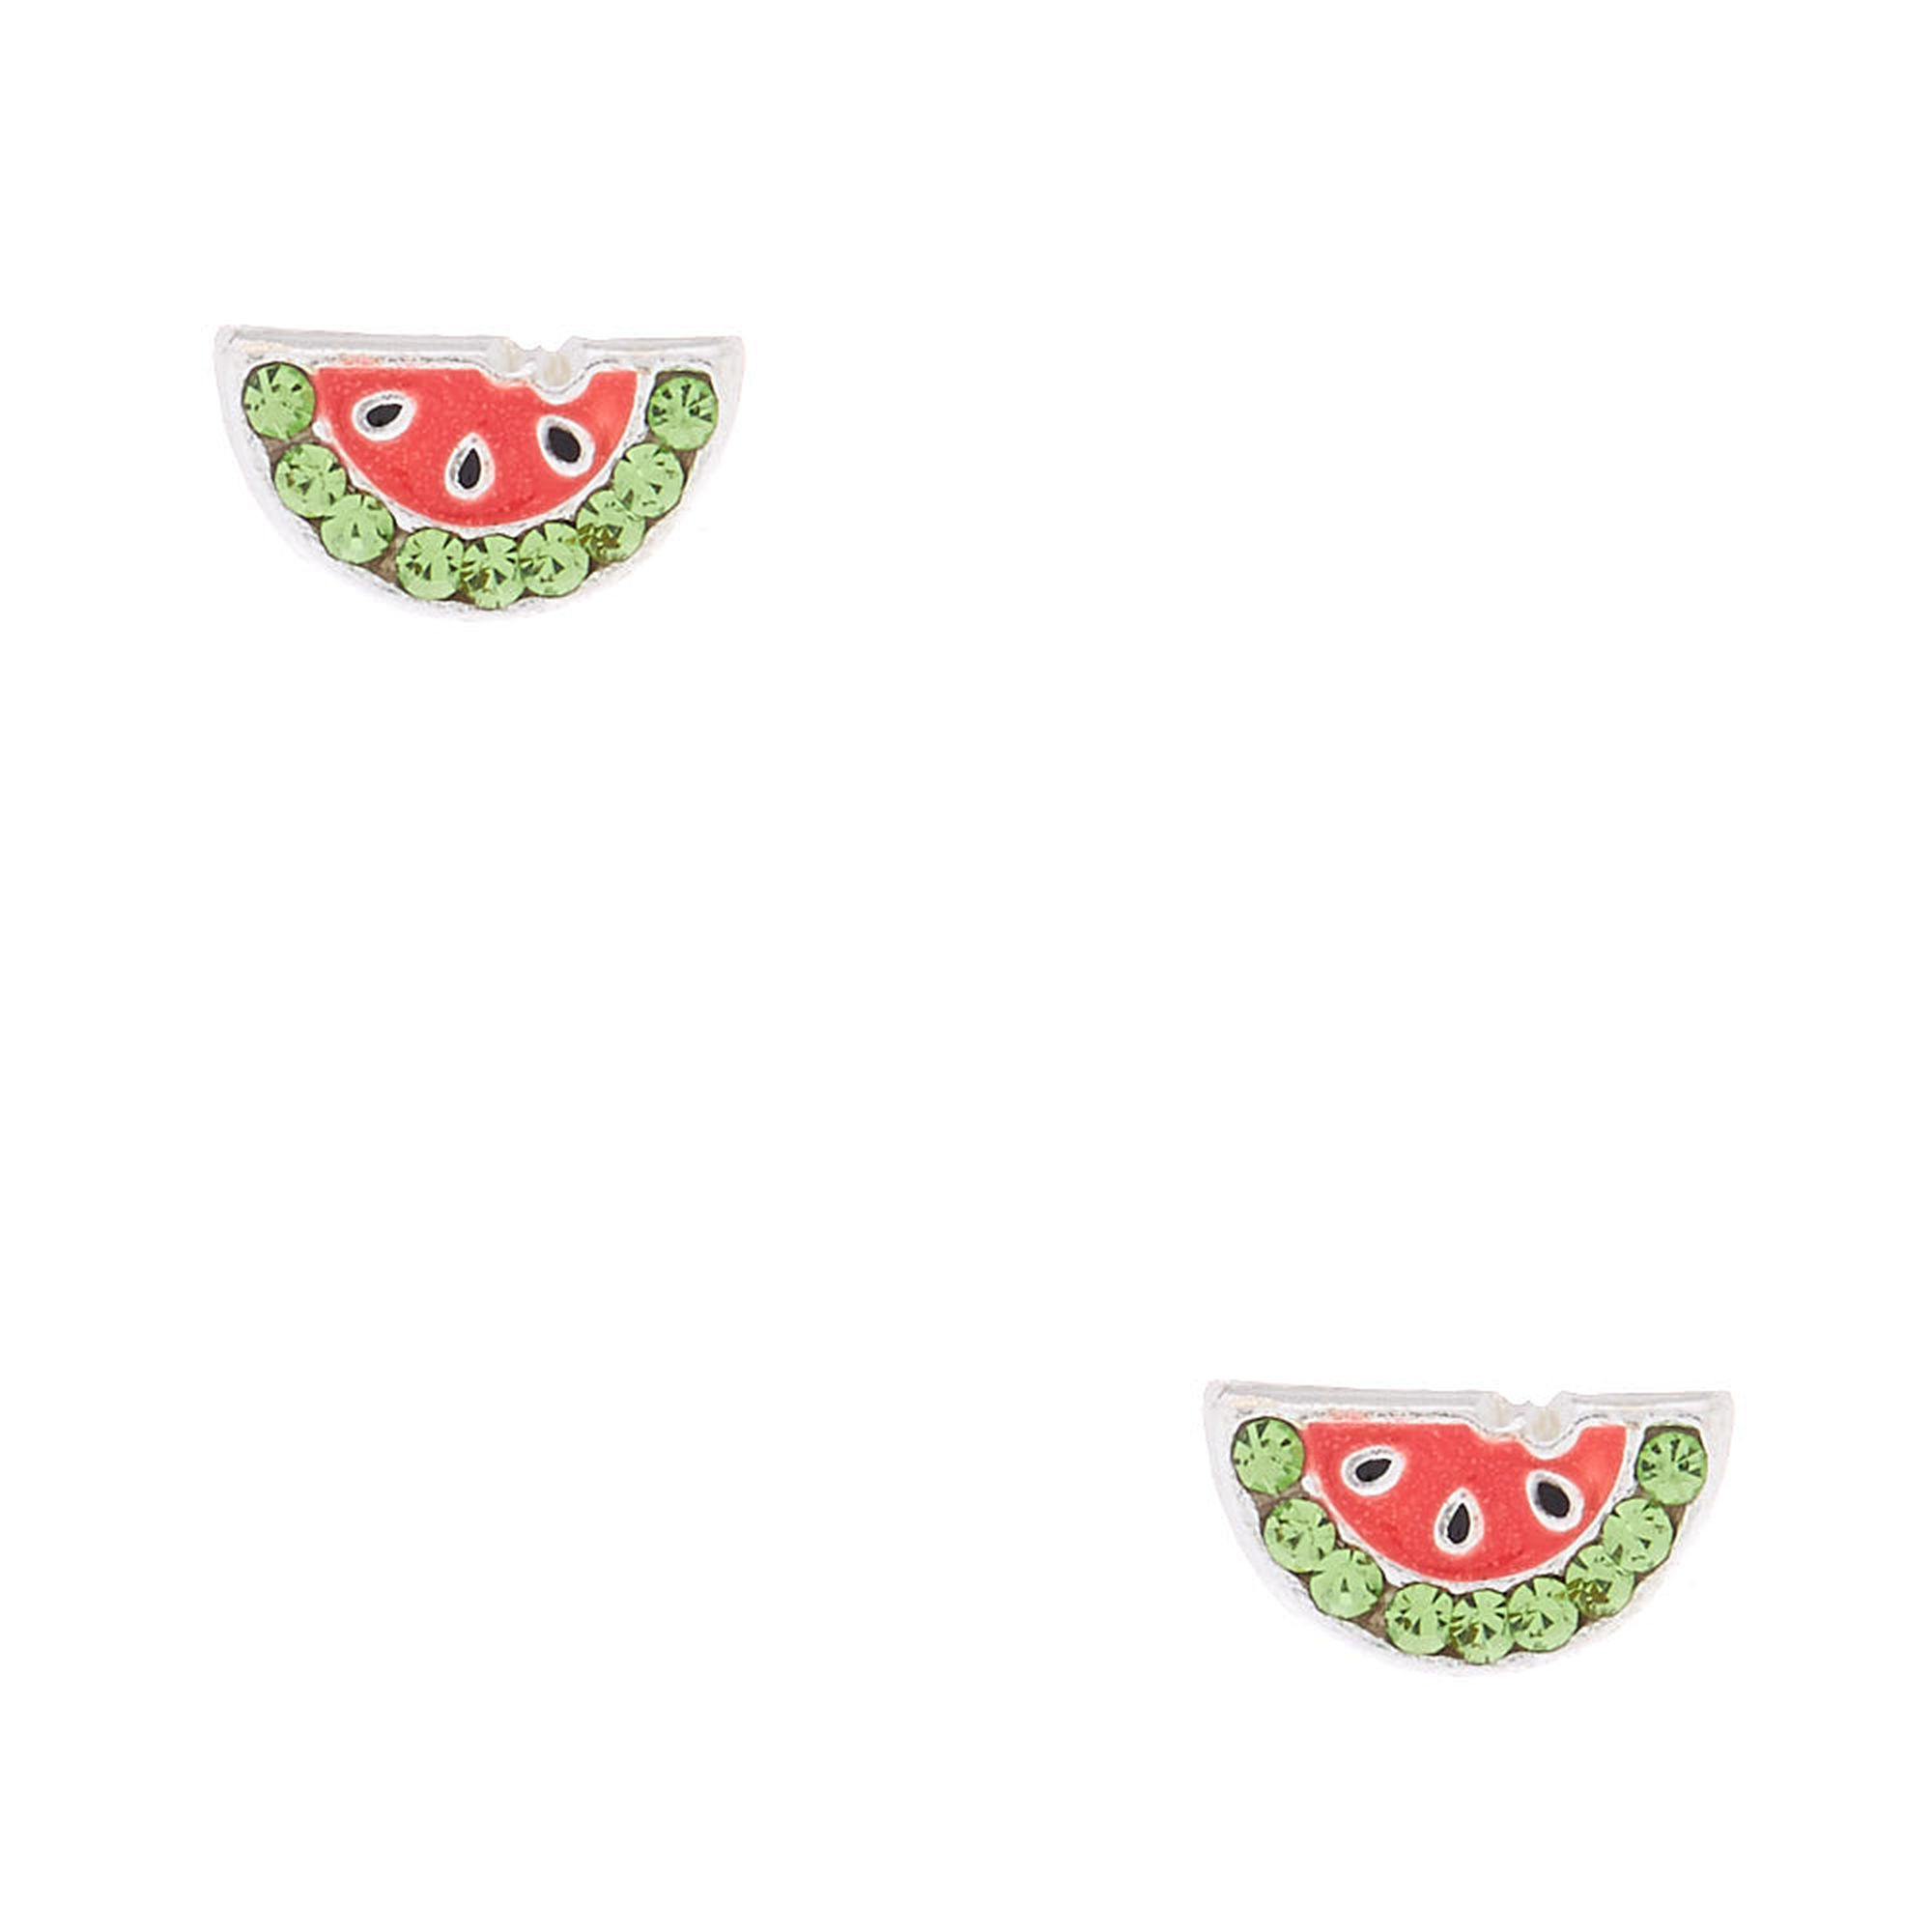 Claire's watermelon earrings